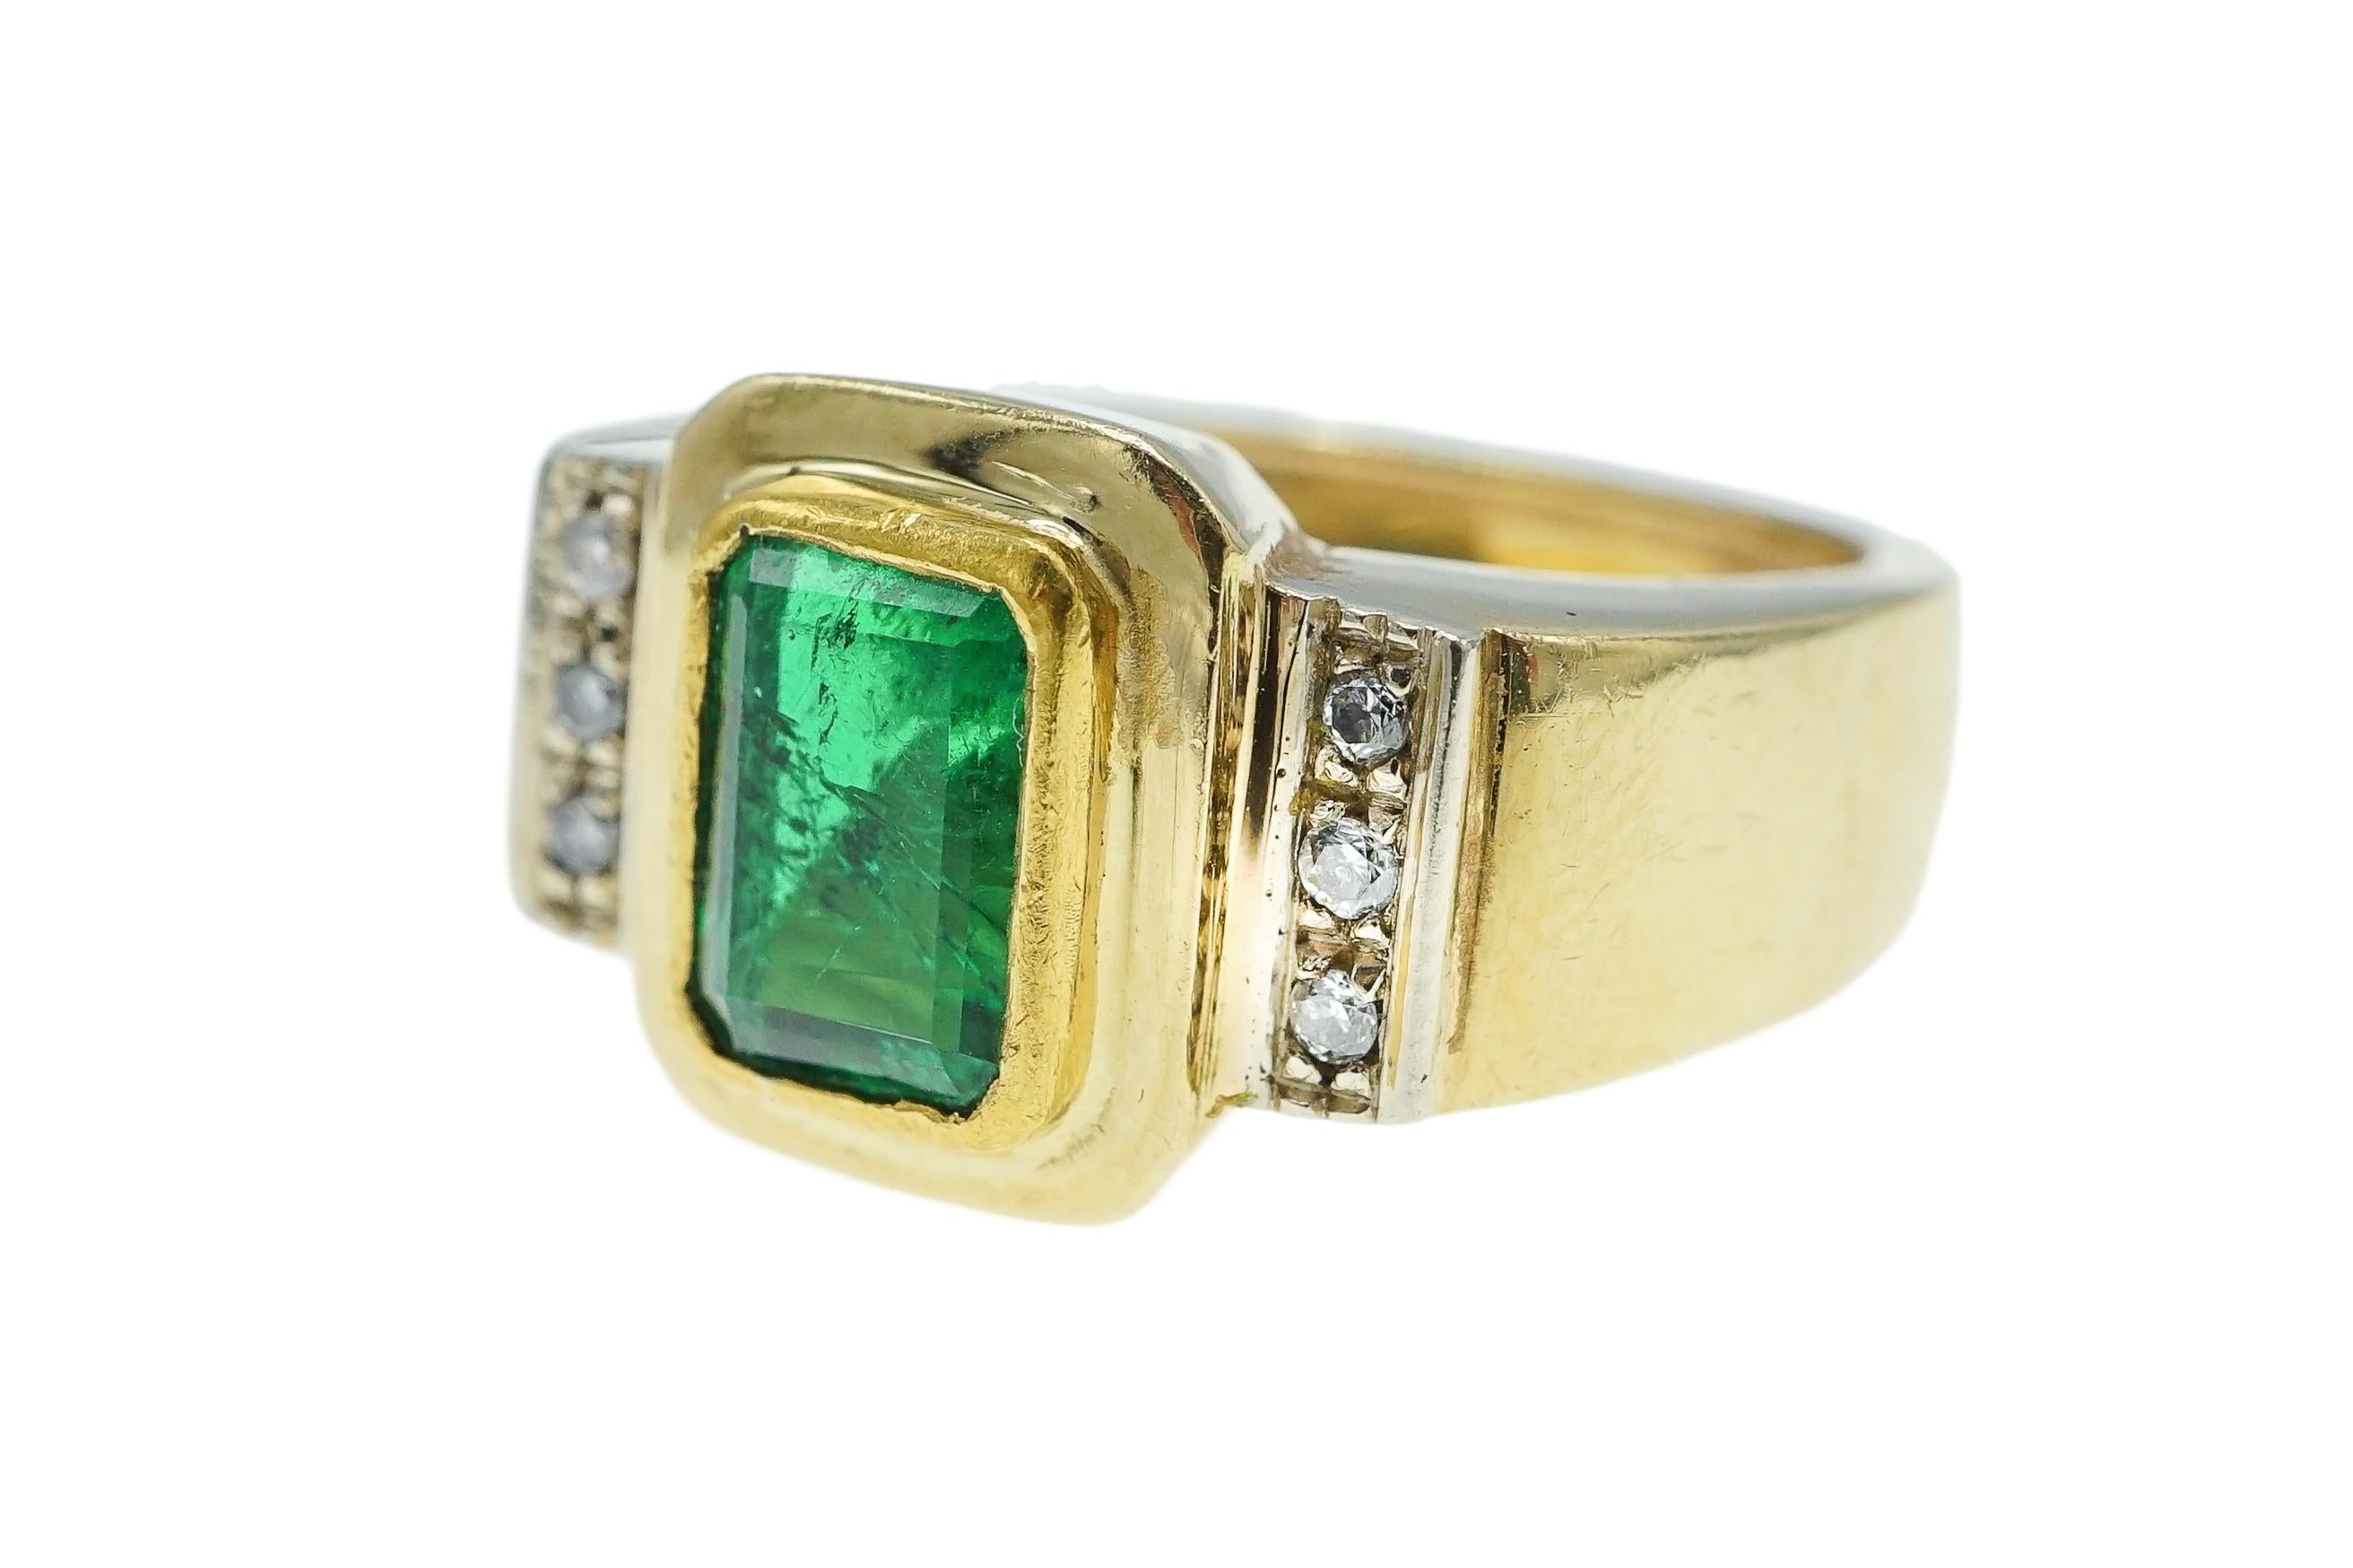 18 kt., One emerald-cut emerald ap. 1.40 ct., 6 round diamonds ap. .10 ct., ap. 6.2 dwts. Size 7
Emerald: medium-deep green color saturation, well-cut. 
Diamonds: VS-SI/J-K-L 

SKU#R-02833